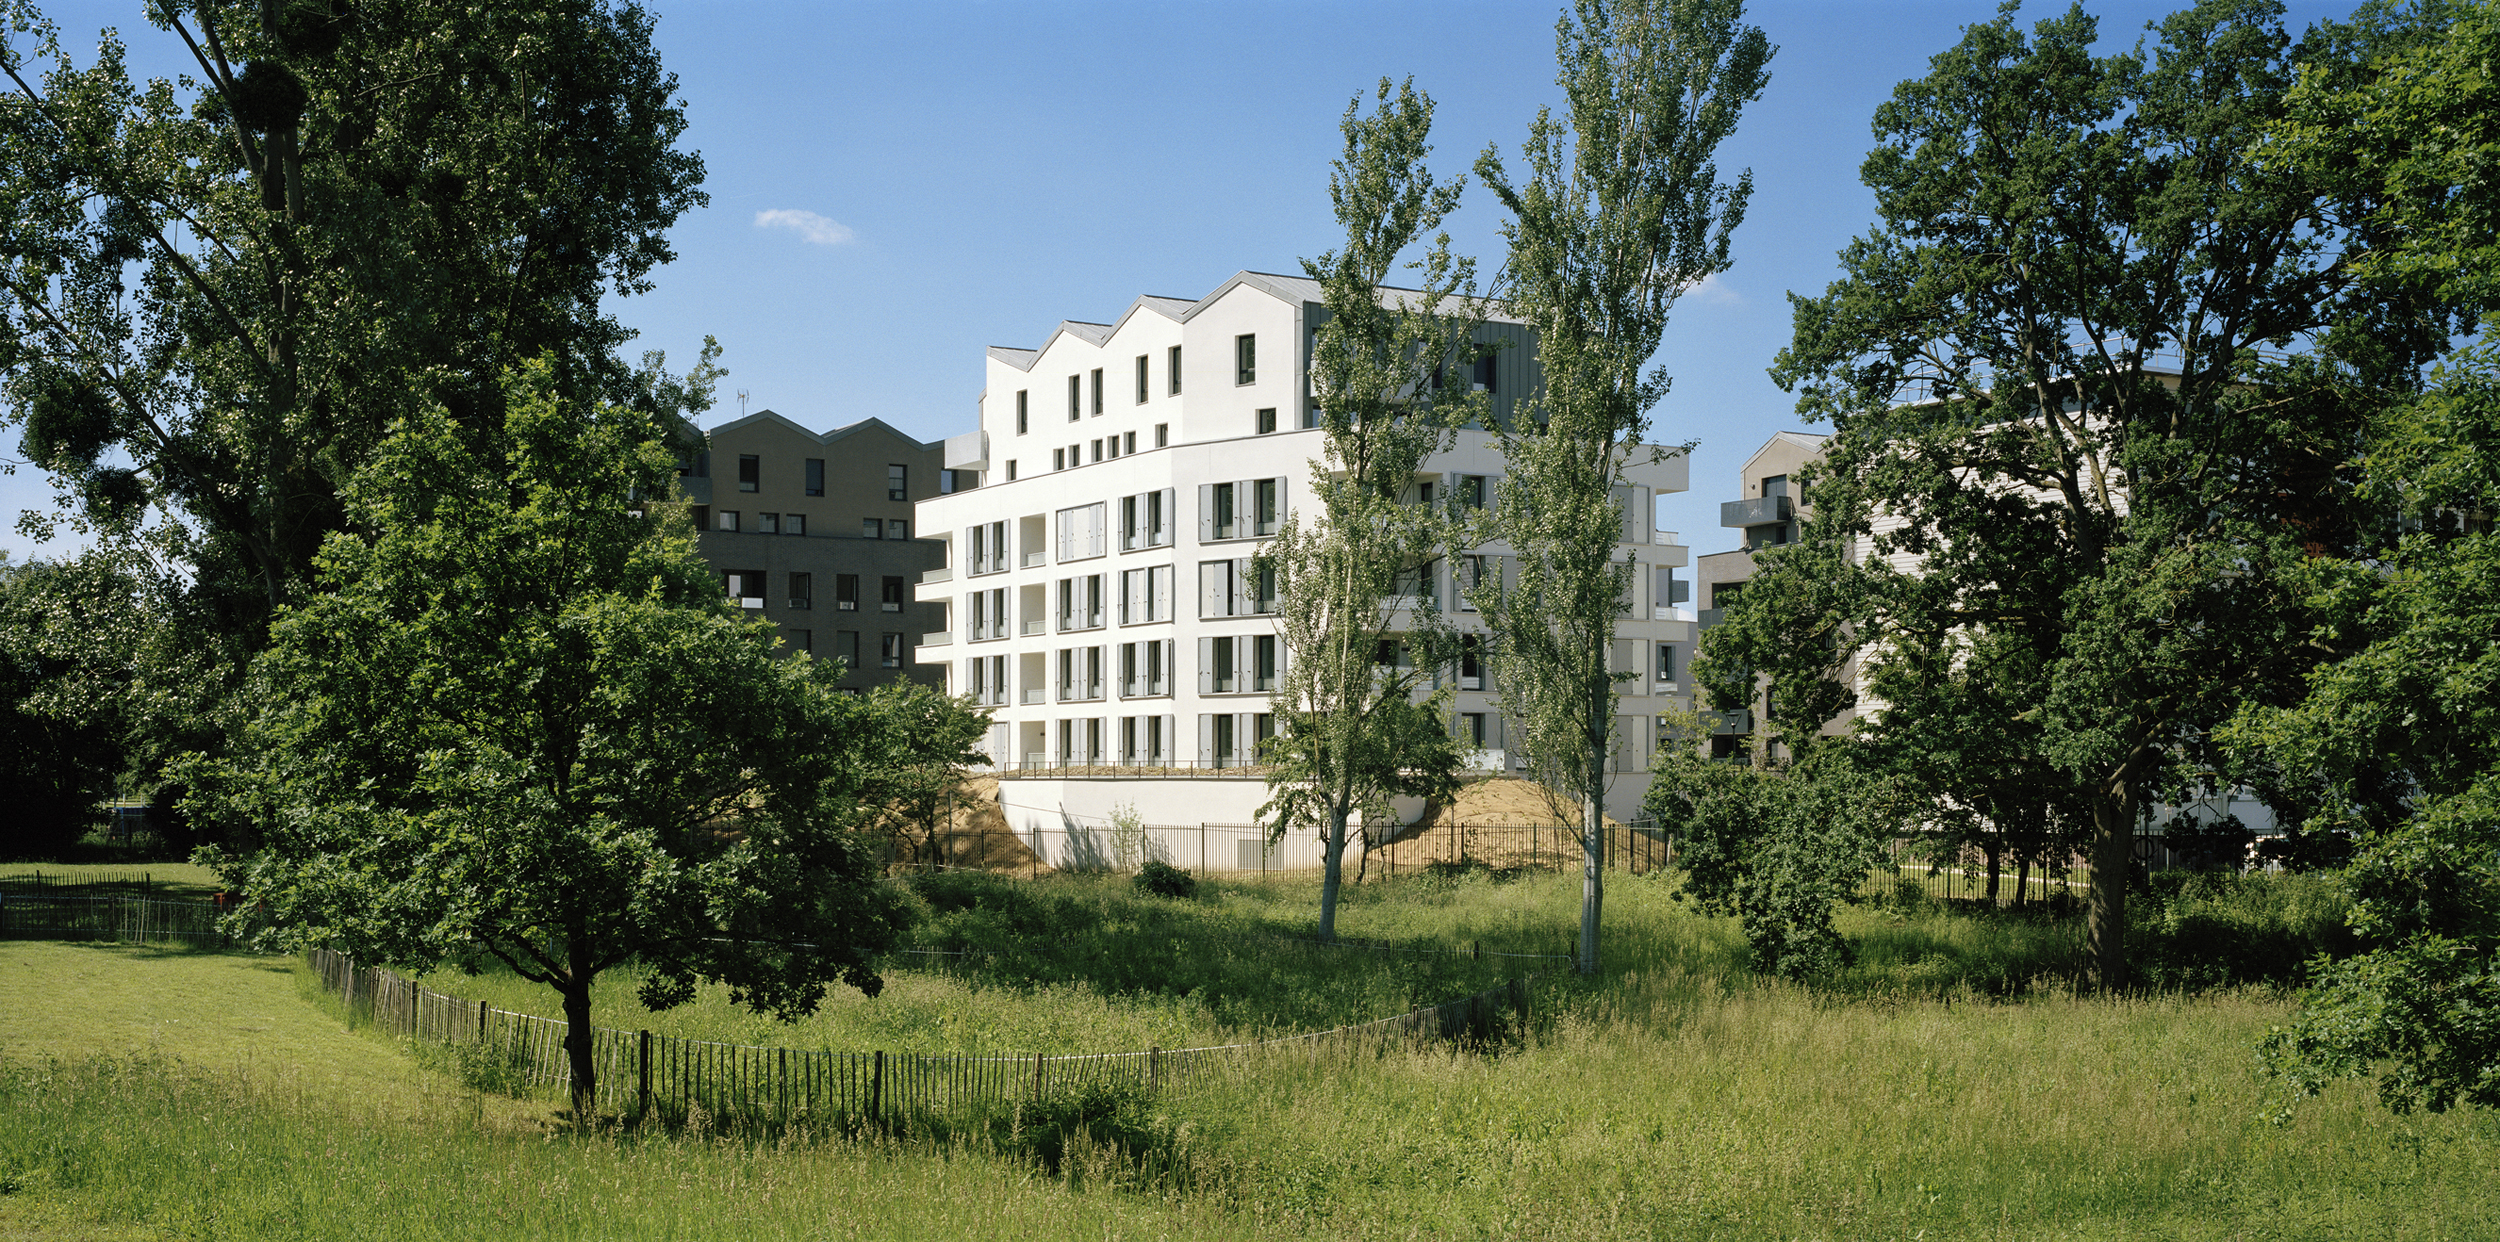 Bauen-Bauen, logements sociaux à Neuilly-sur-Marne, 1er juin 2019.